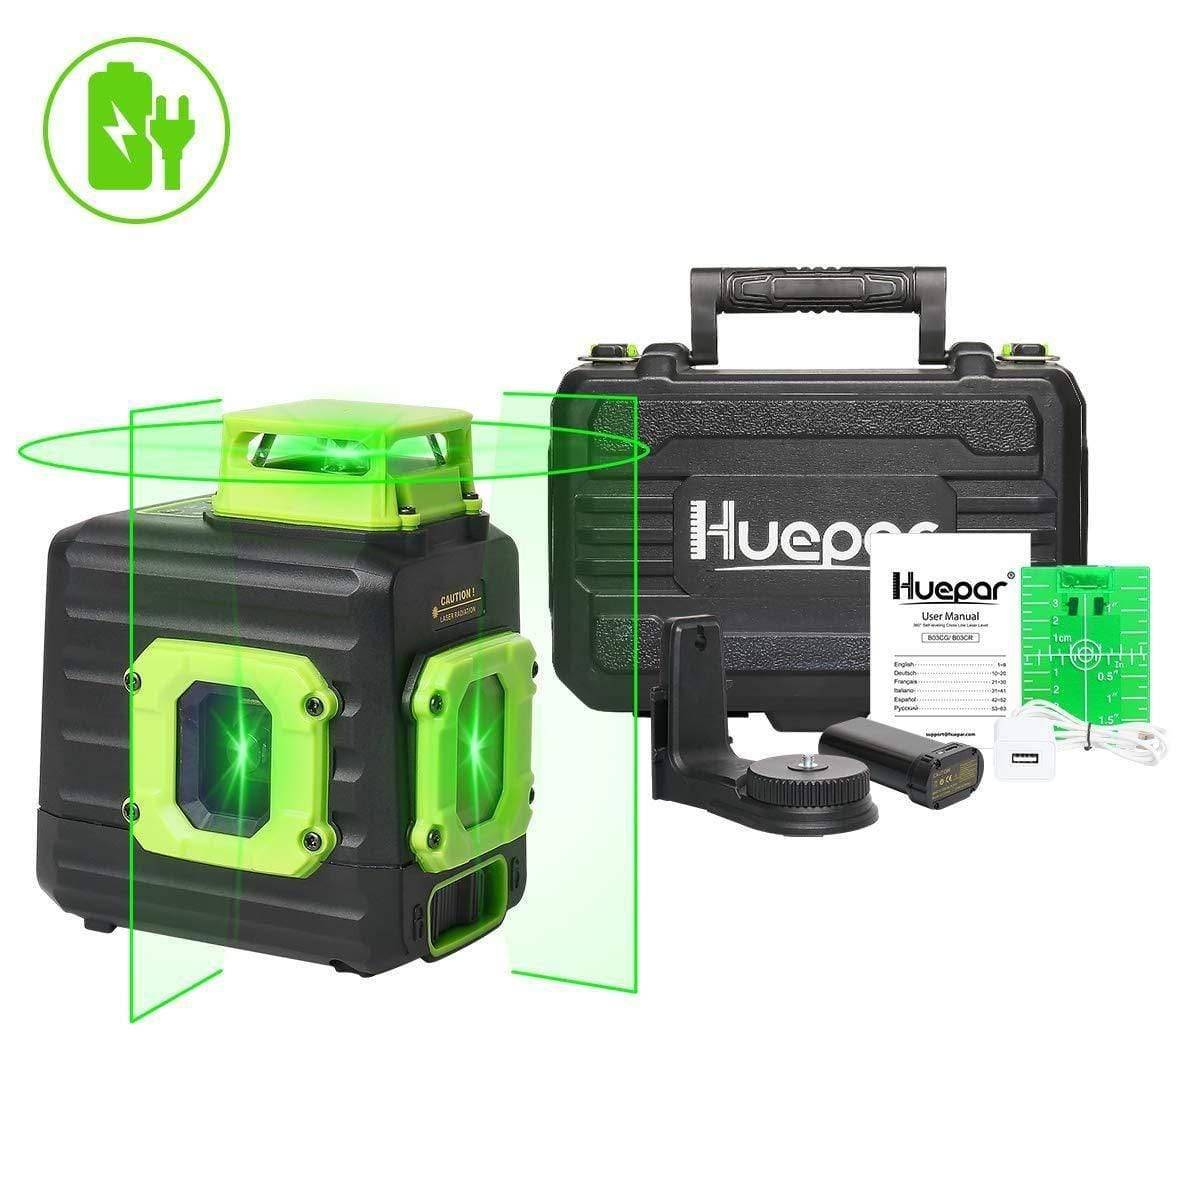 Huepar NT411G - Four Vertical and One Horizontal Cross Lines Laser With  Plumb Dot, Green Beam Alignment Self-leveling Laser Tool freeshipping -  HUEPAR US